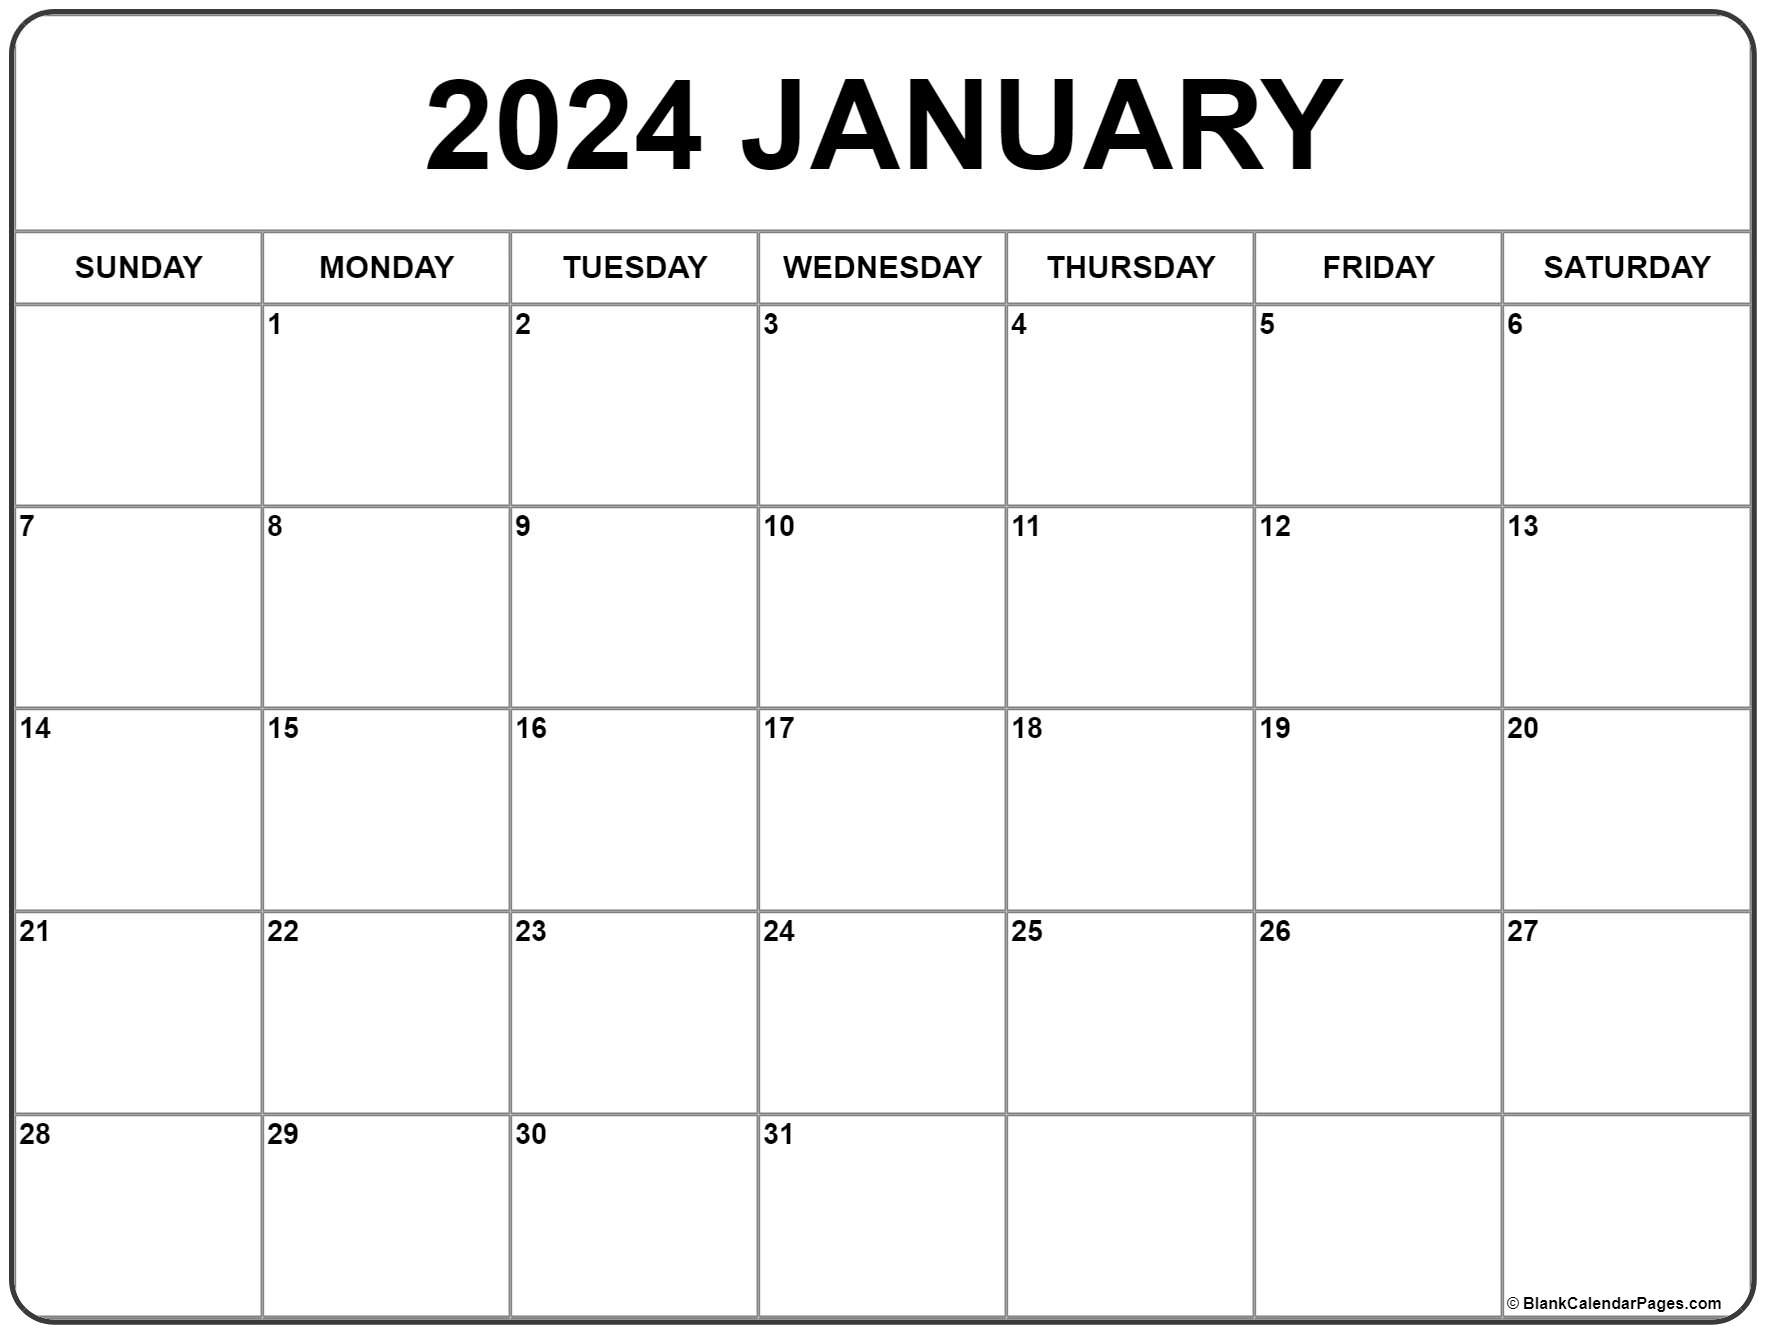 January 2024 Calendar | Free Printable Calendar for Printable Calendar Free January 2024